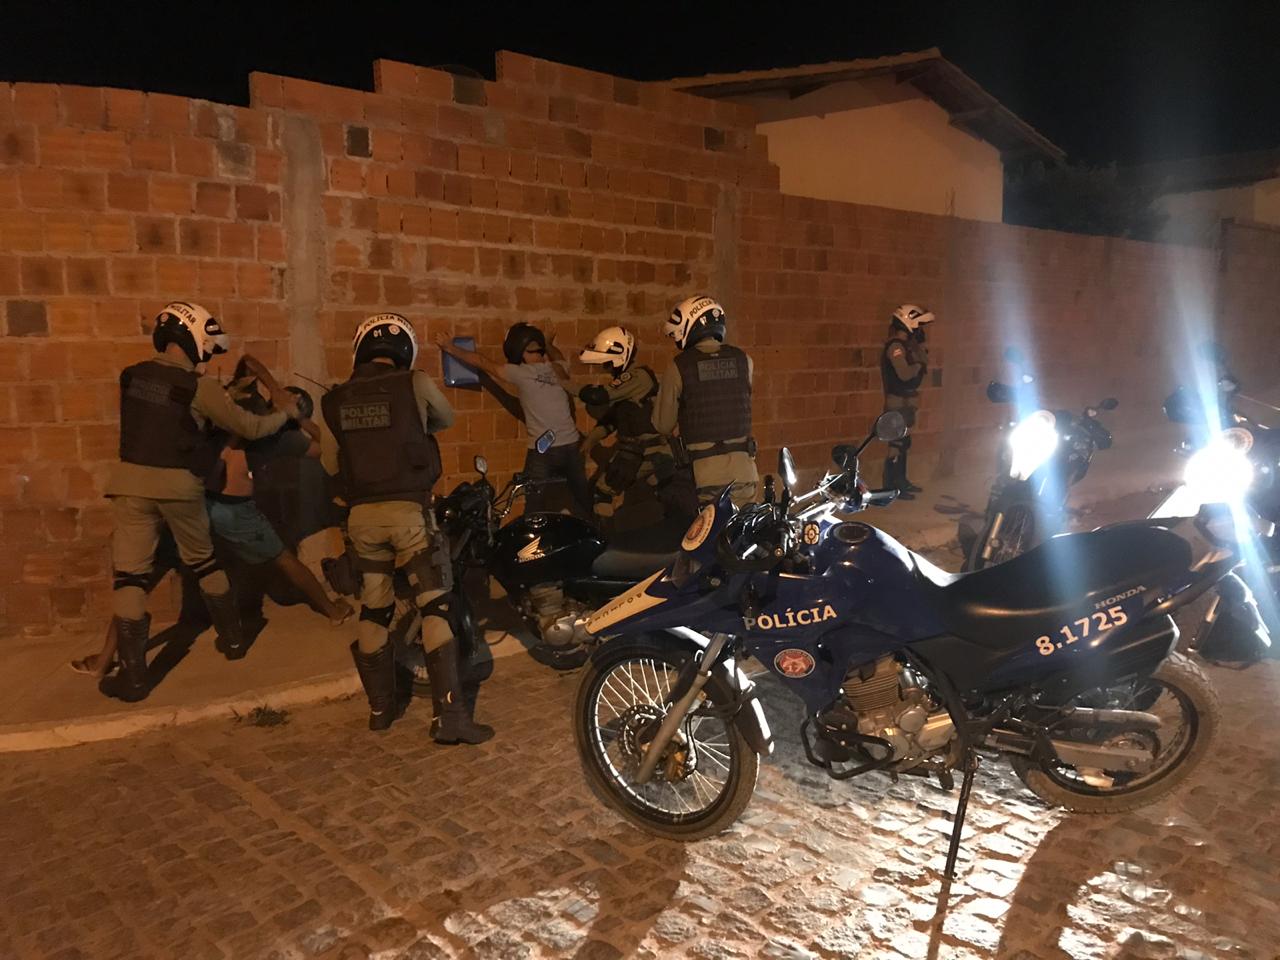 Policia Militar intensifica policiamento ostensivo em Guanambi